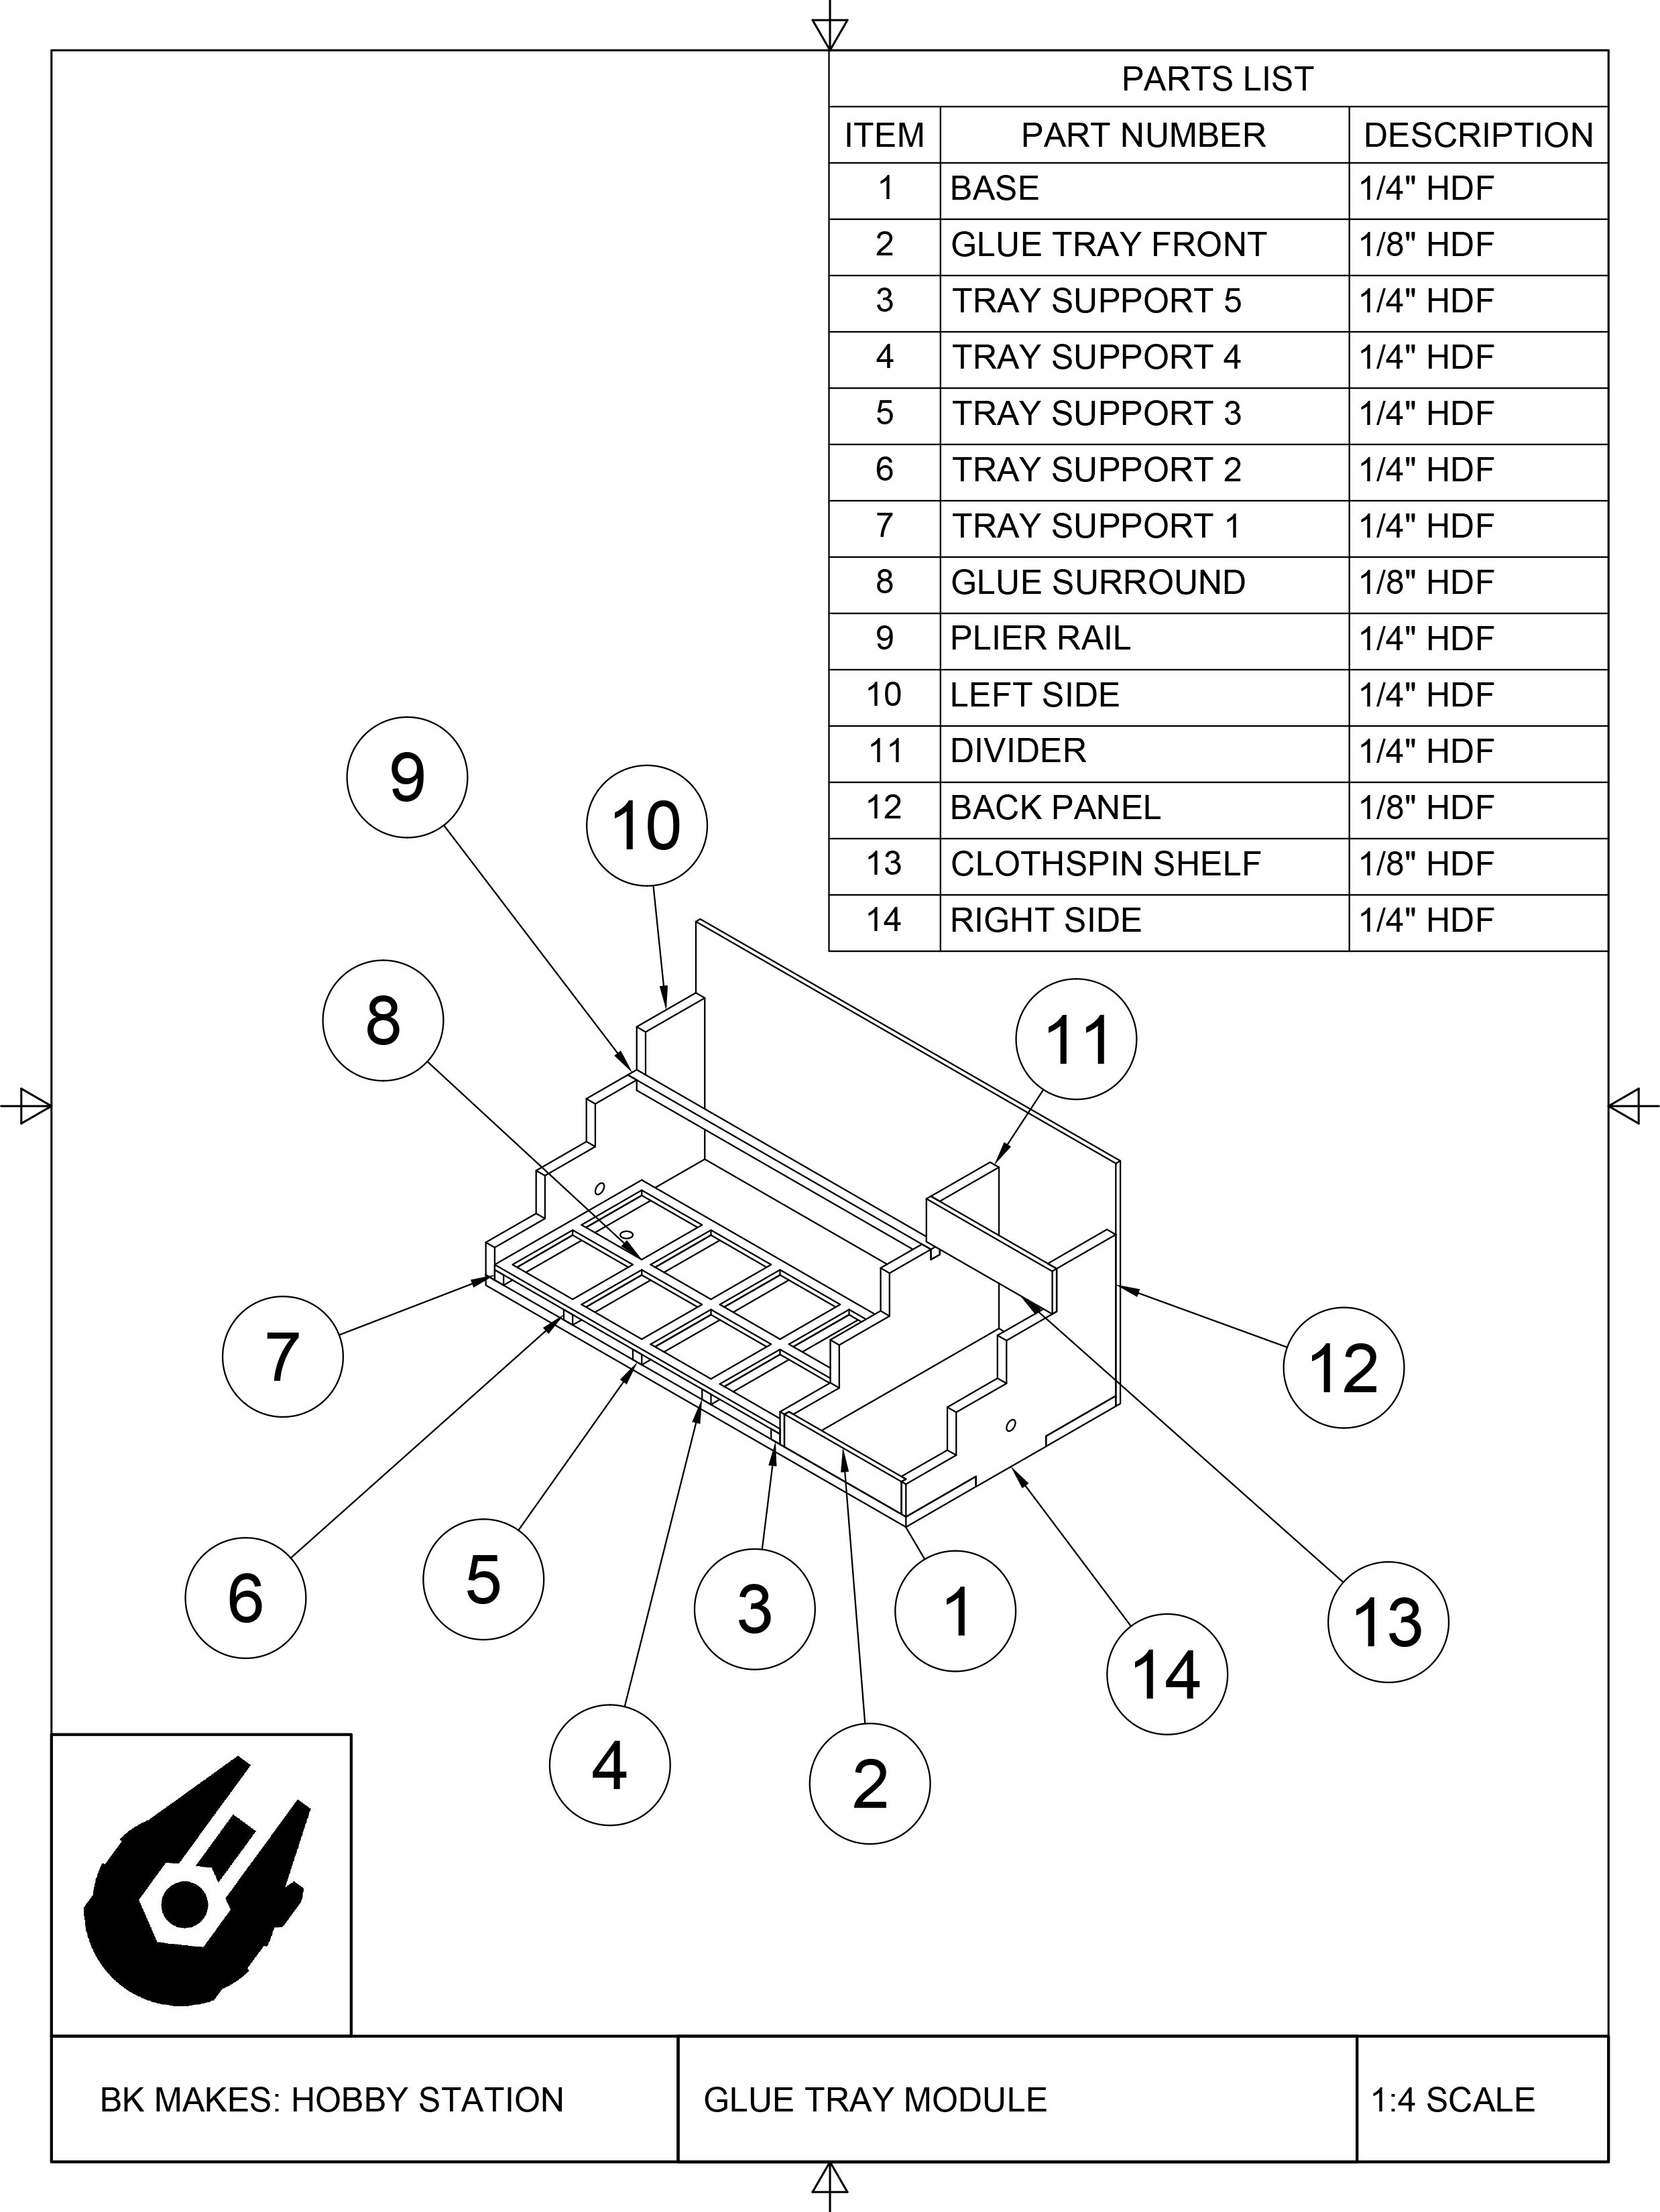 BK MAKES Glue Tray Module Assembly Sheet.jpg